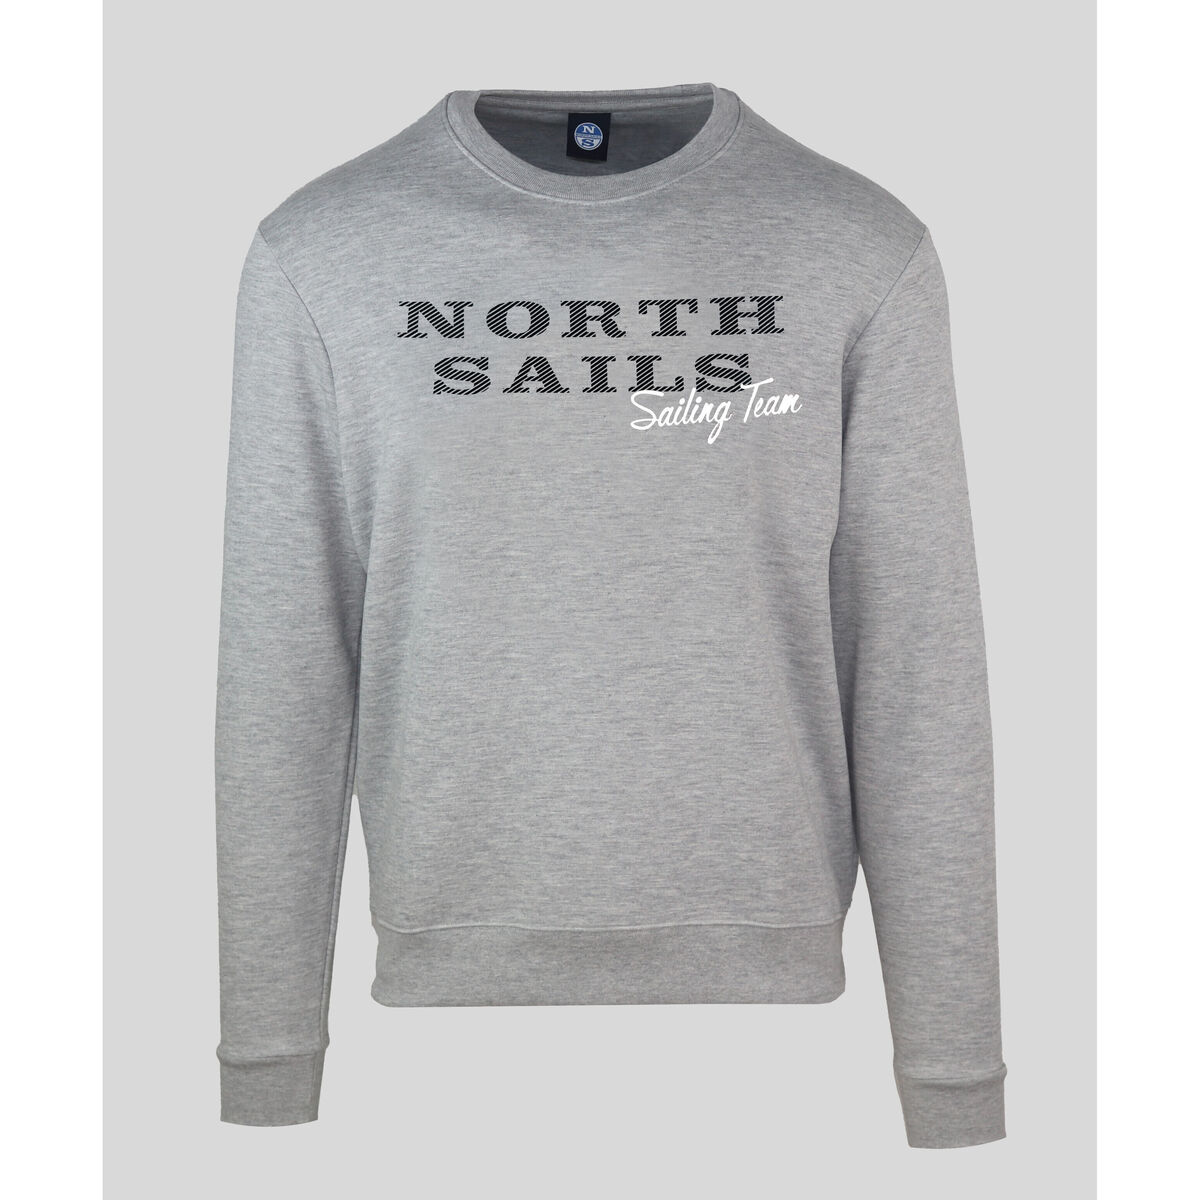 Oblačila Moški Puloverji North Sails - 9022970 Siva